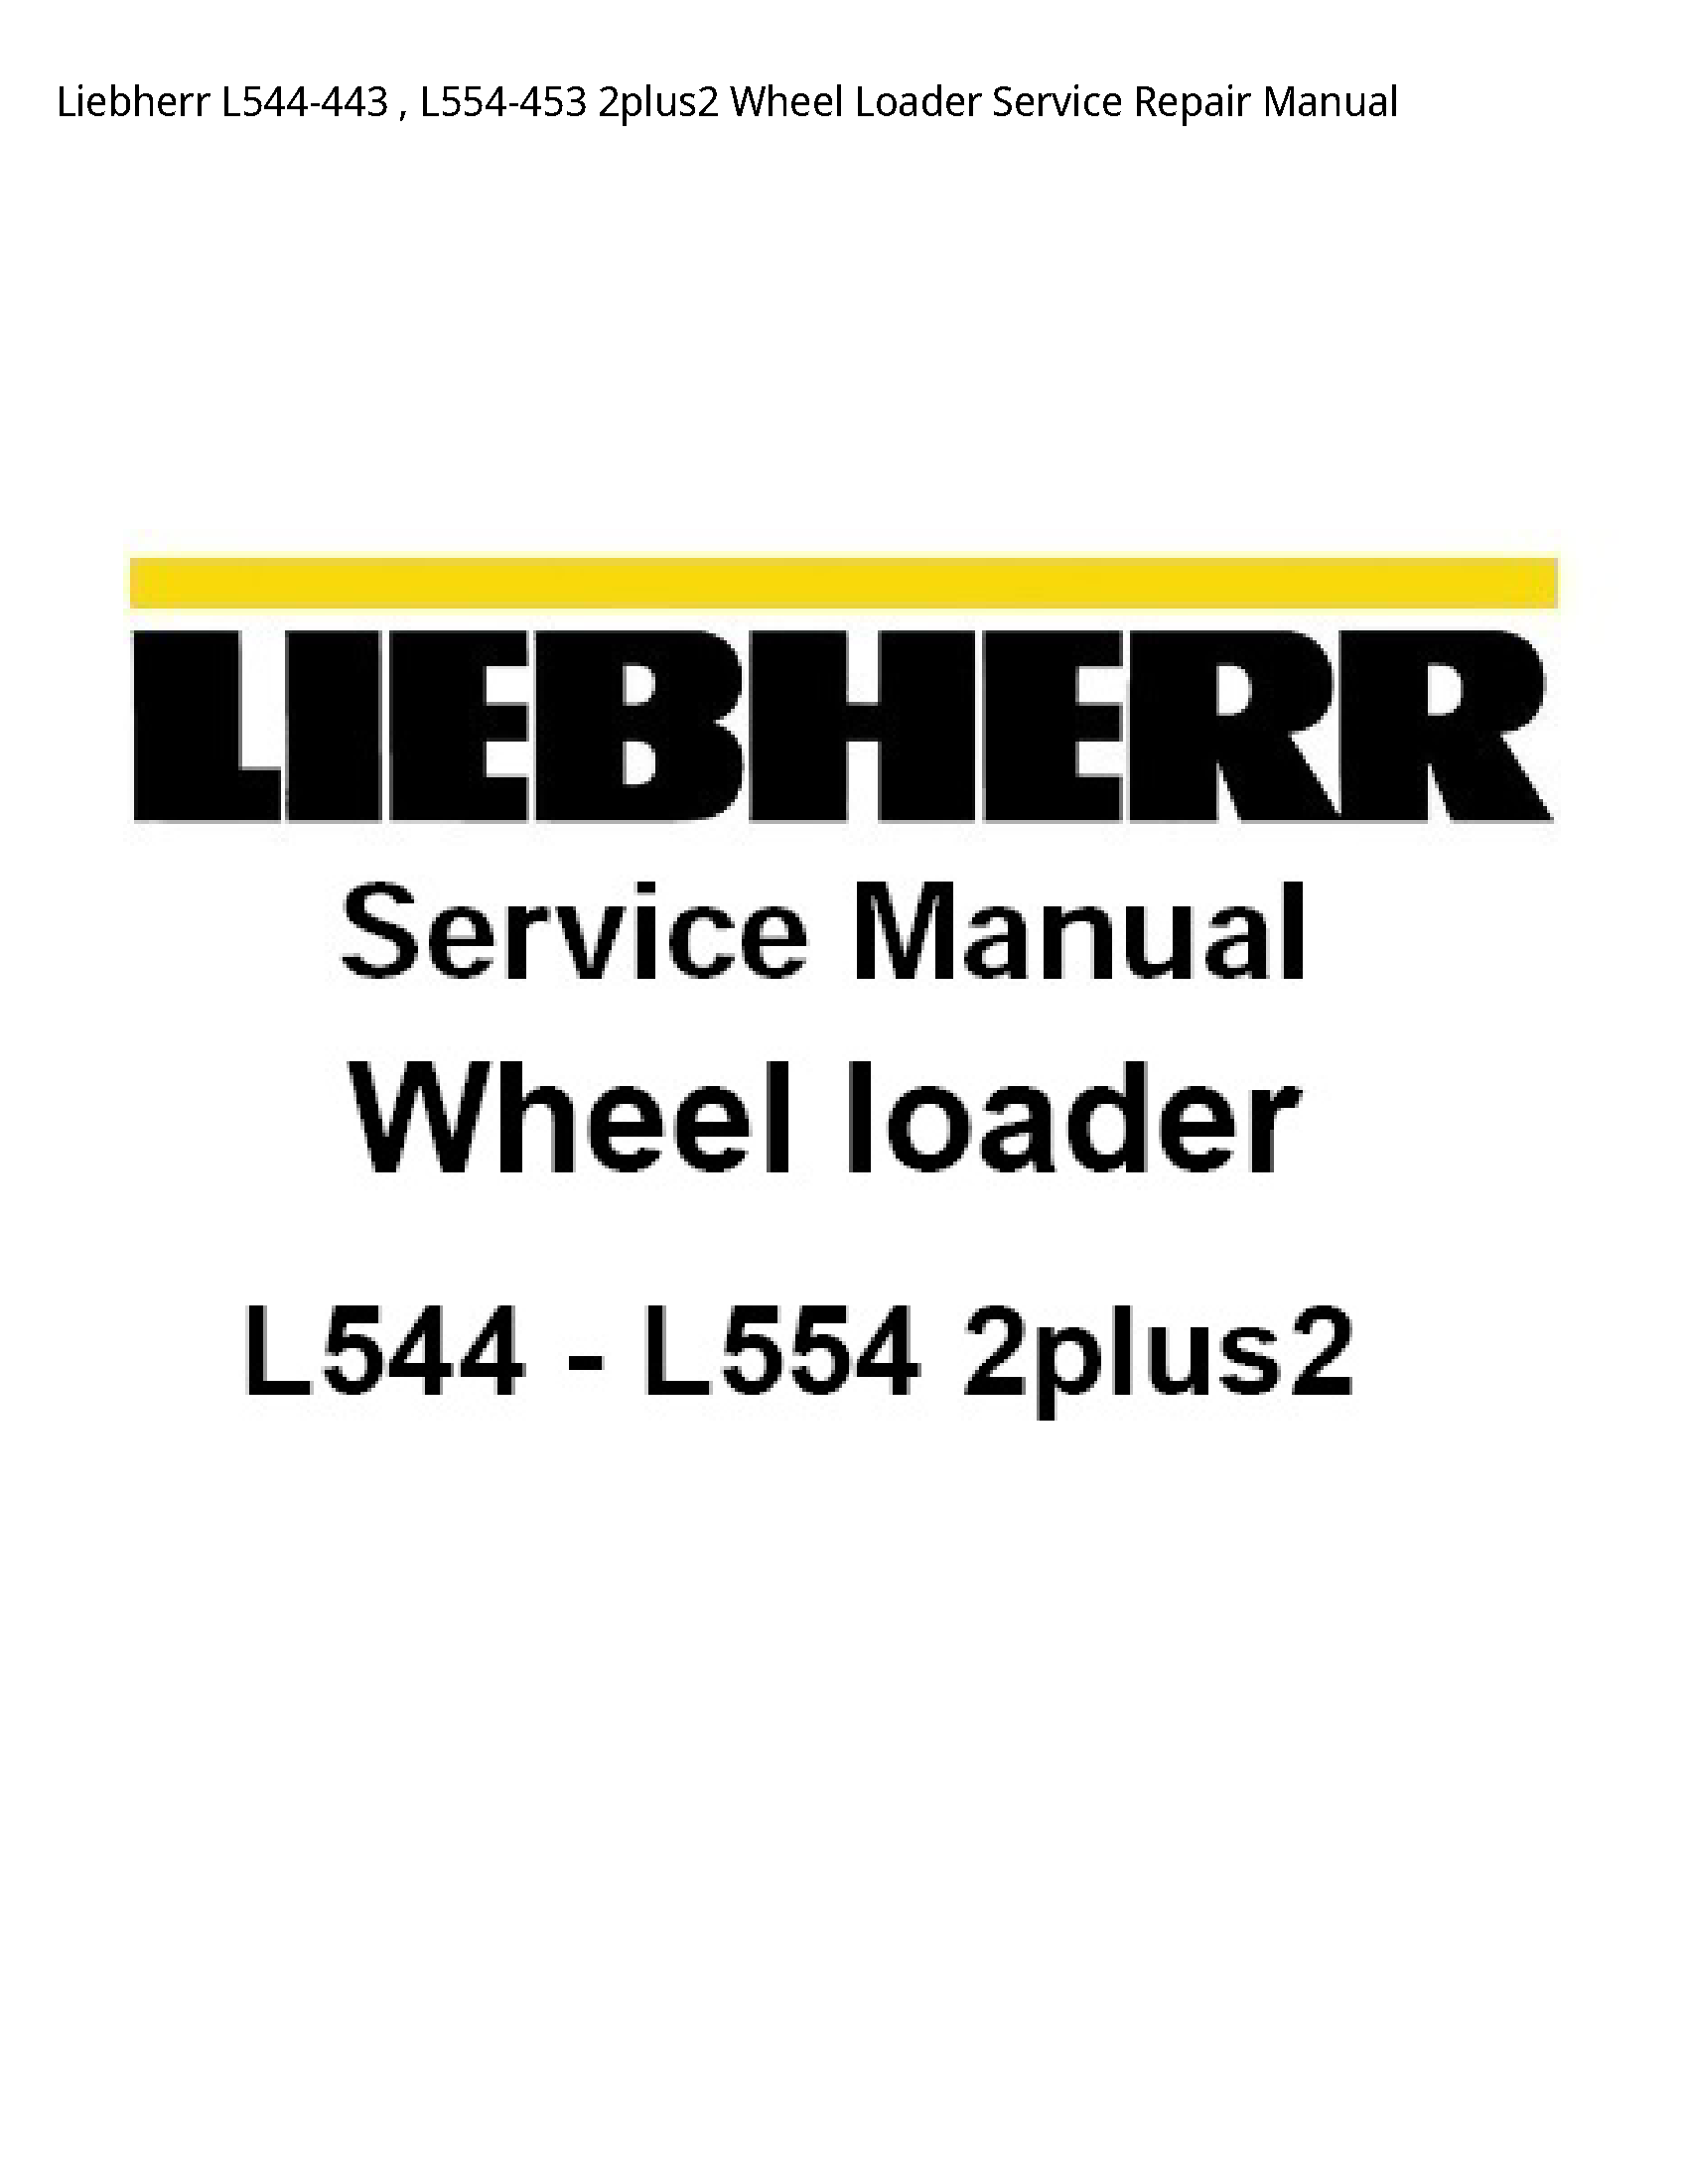 Liebherr L544-443 Wheel Loader manual